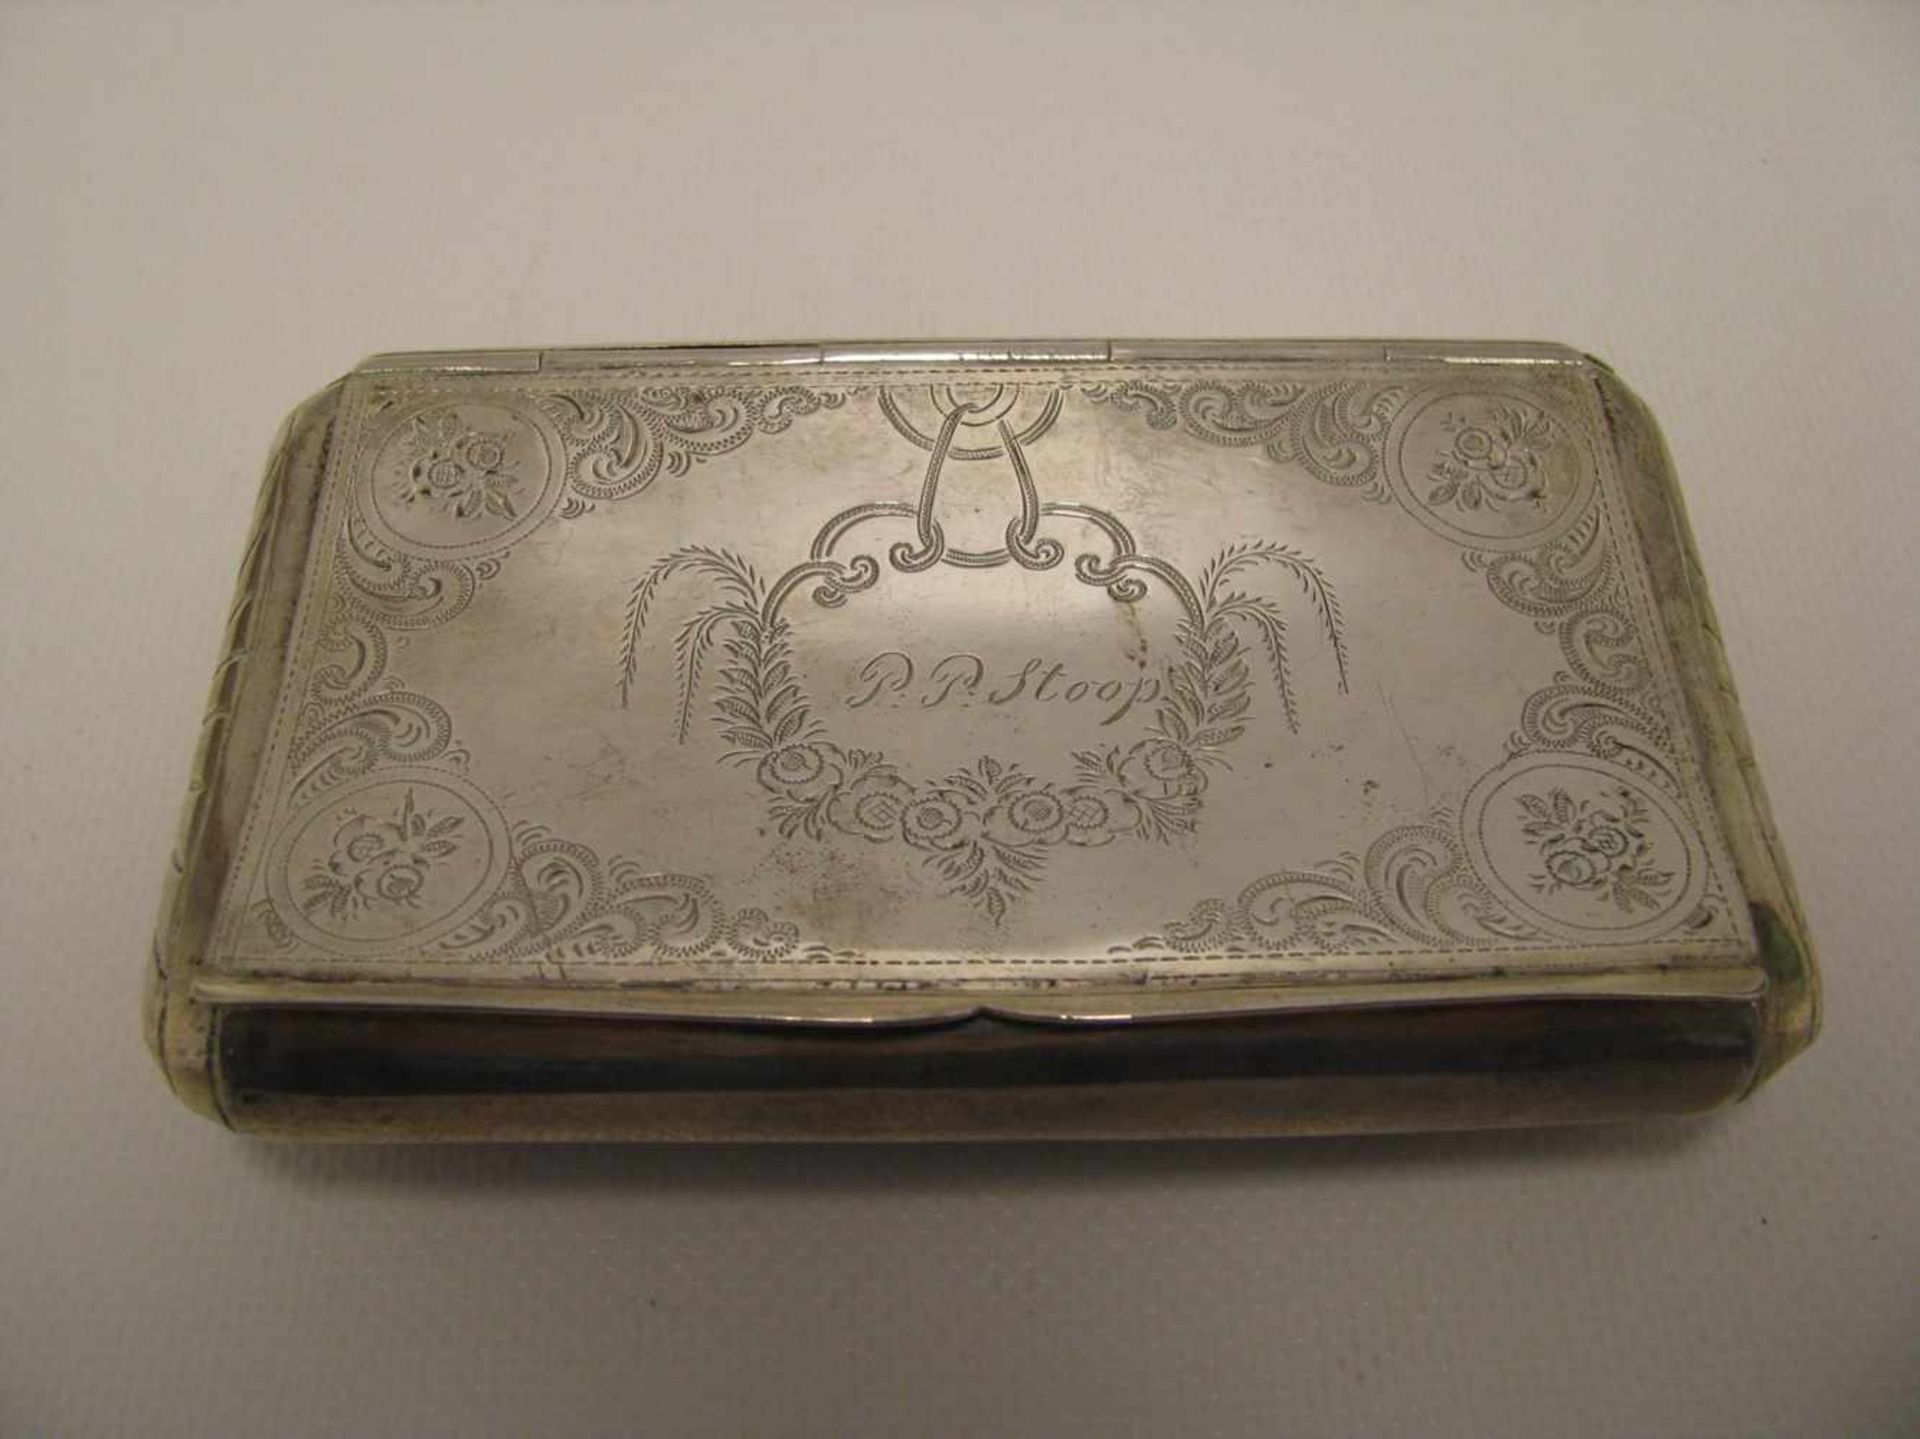 Tabakdose, um 1800, 835er Silber, gepunzt, 144 g, 2,2 x 13,5 x 8 cm.